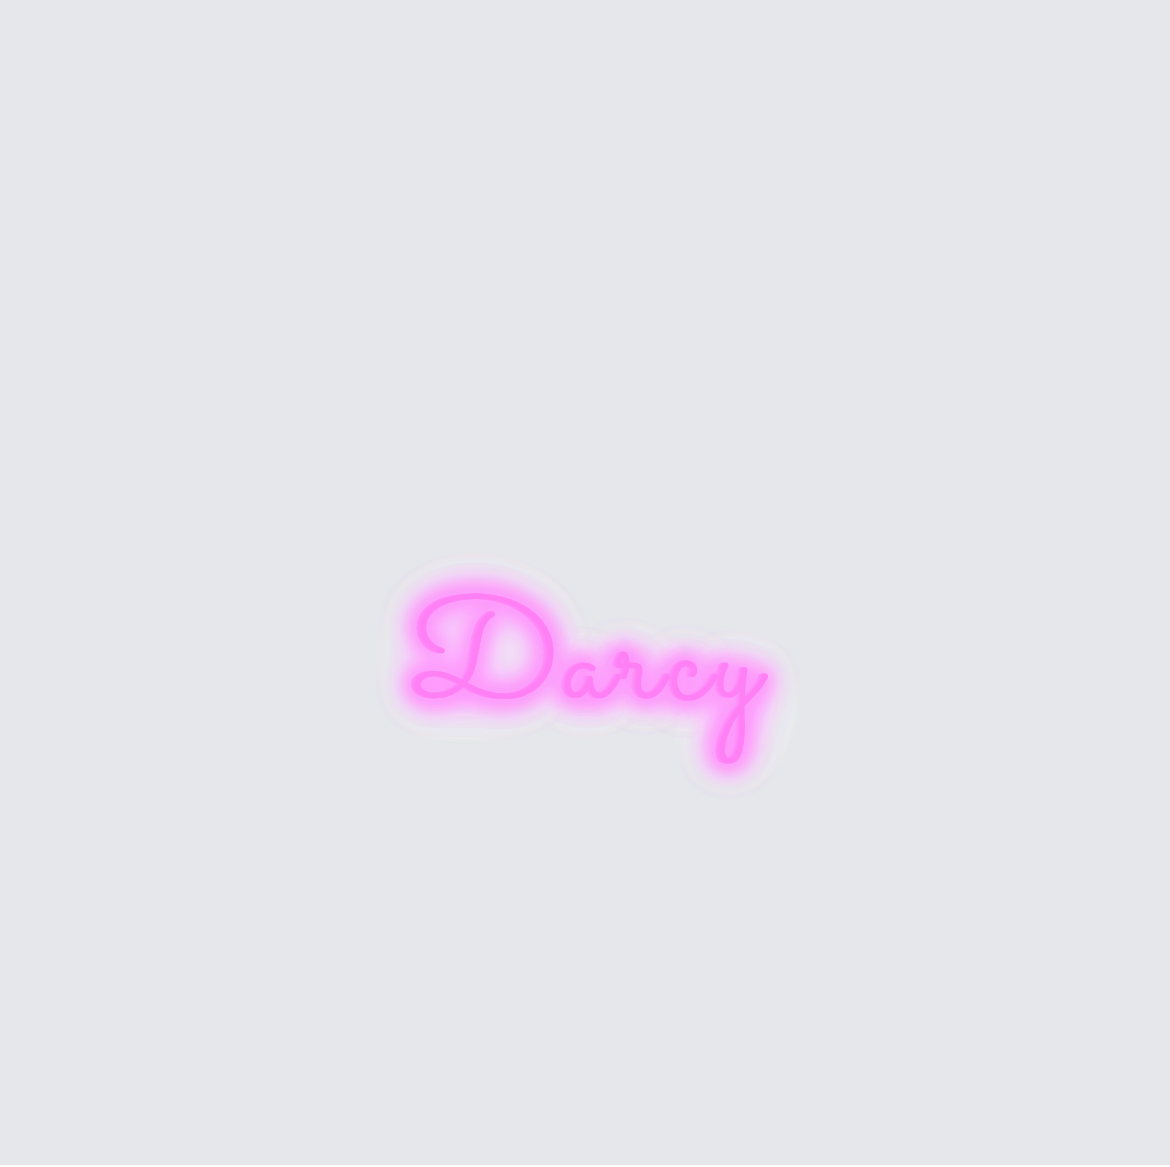 Custom neon sign - Darcy